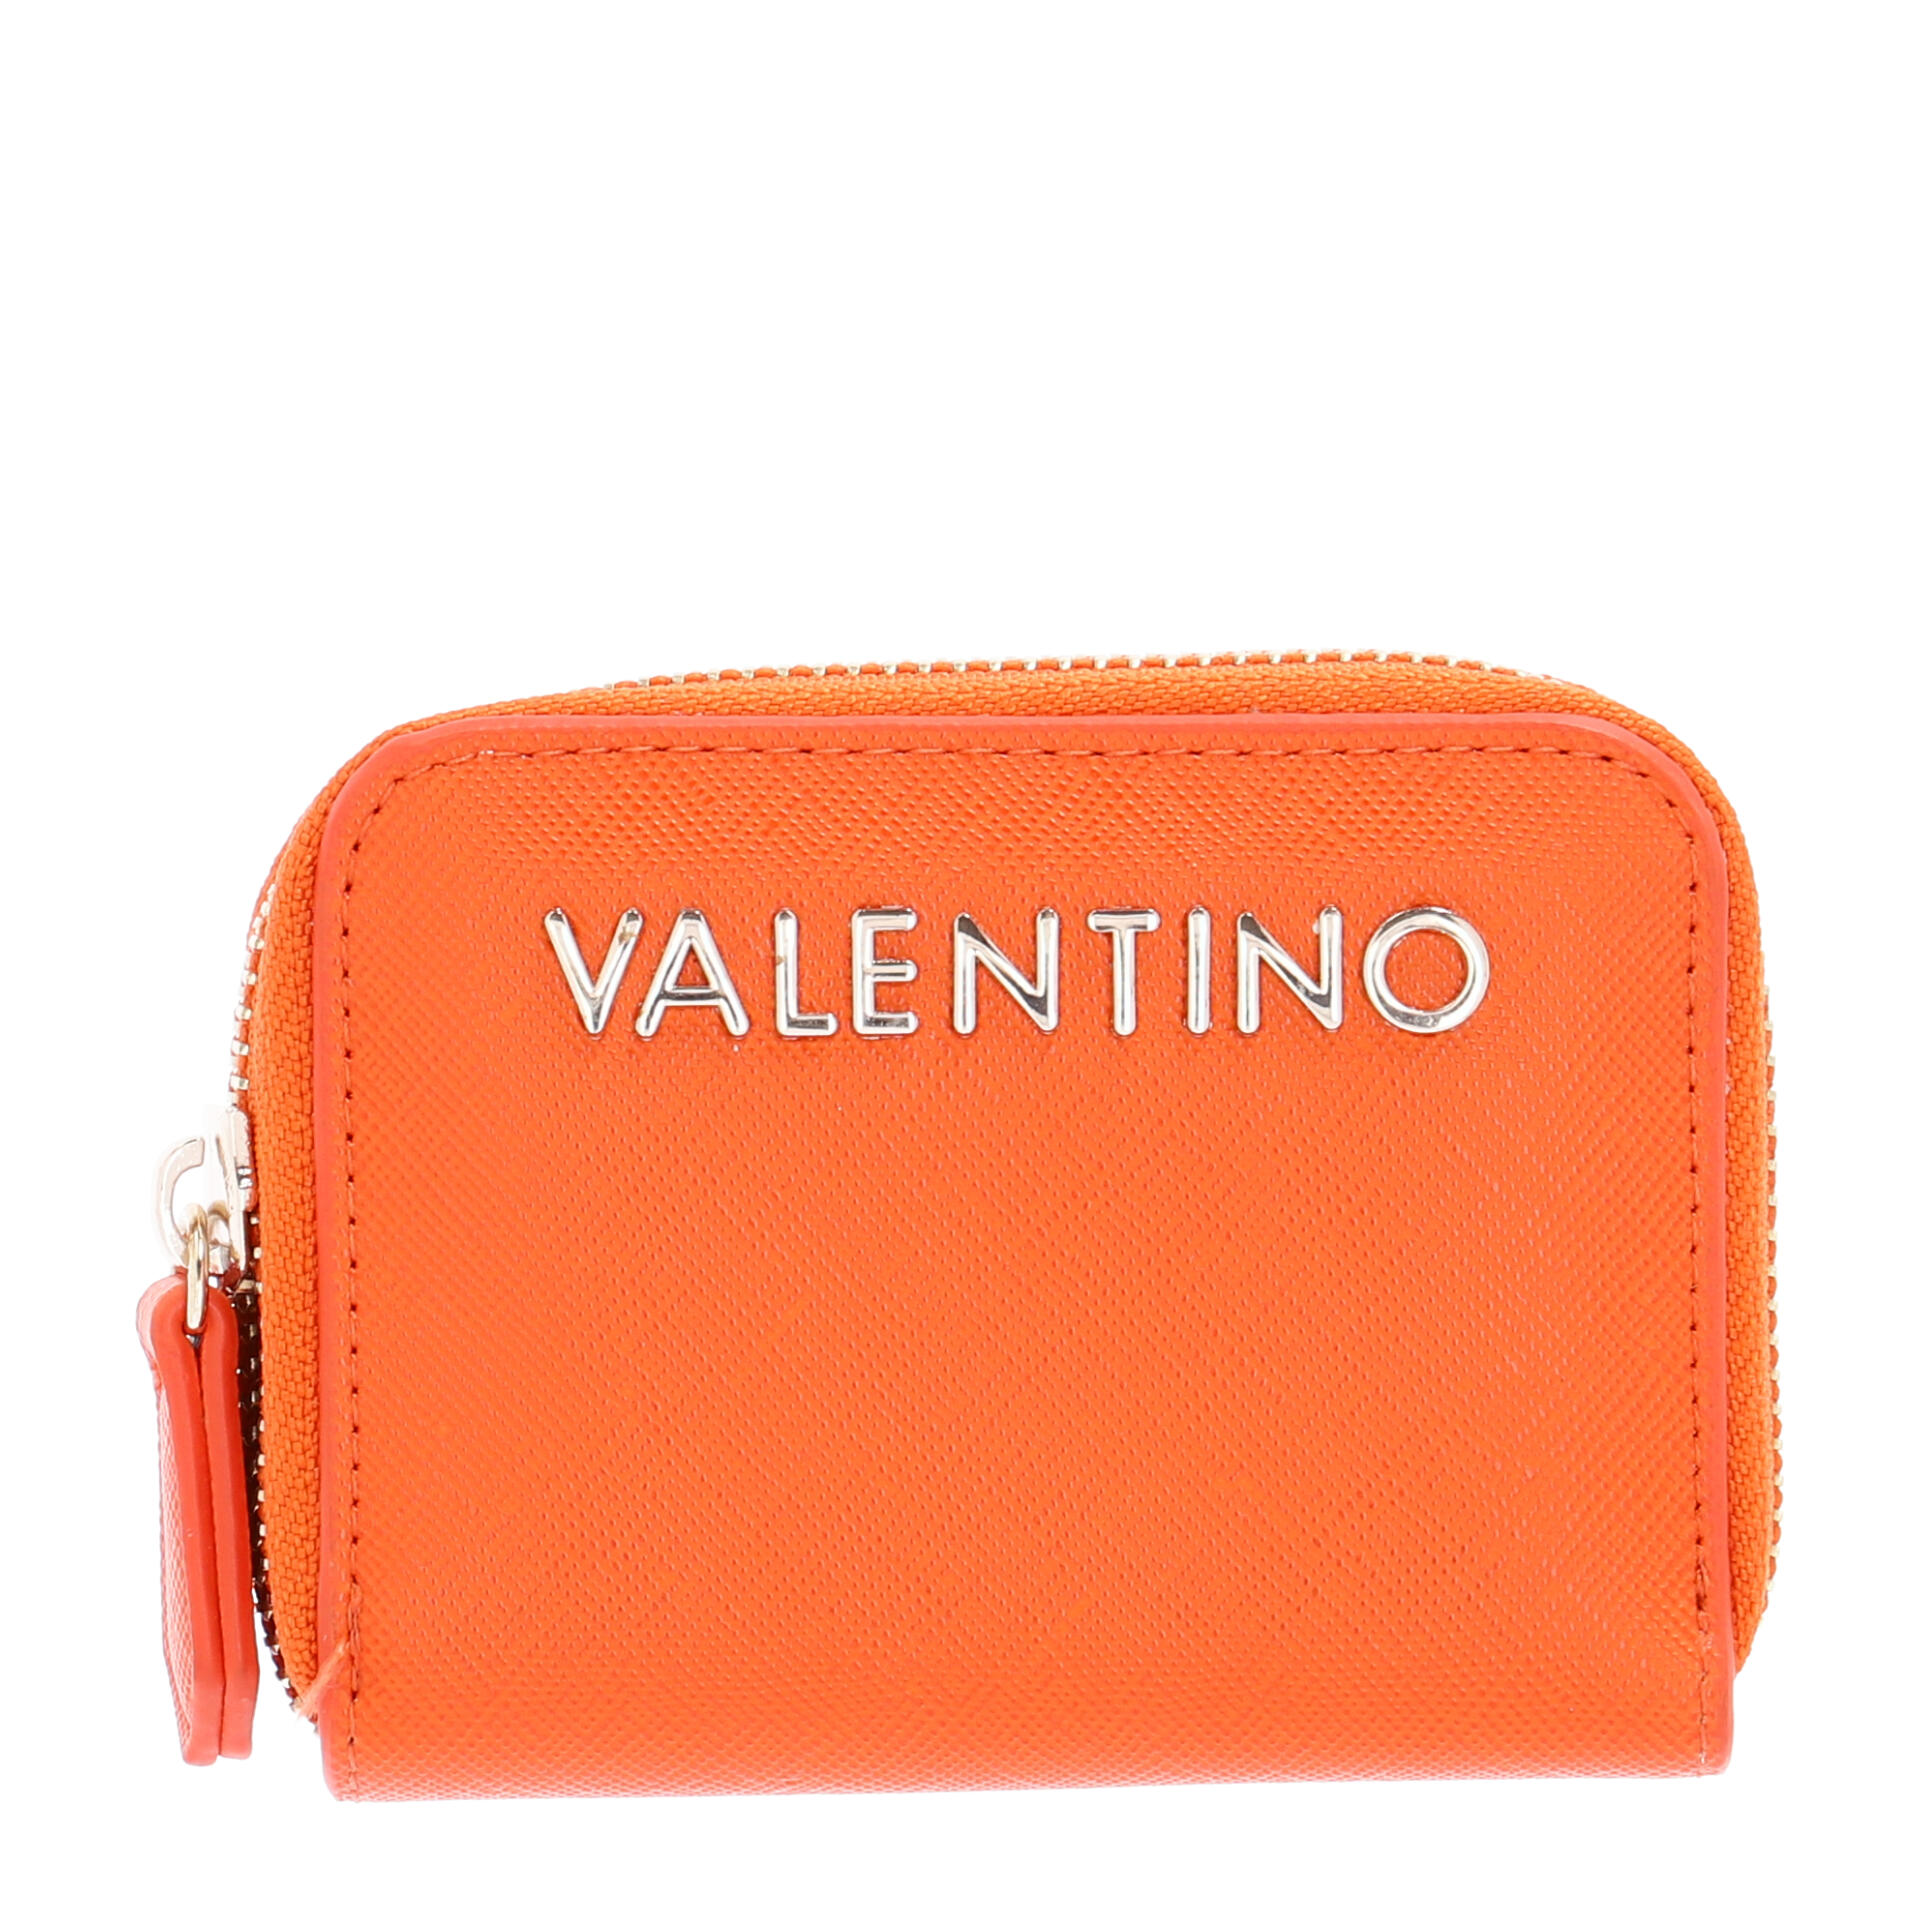 Valentino by Mario Valentino Divina SA Zip Around Geldbörse arancio